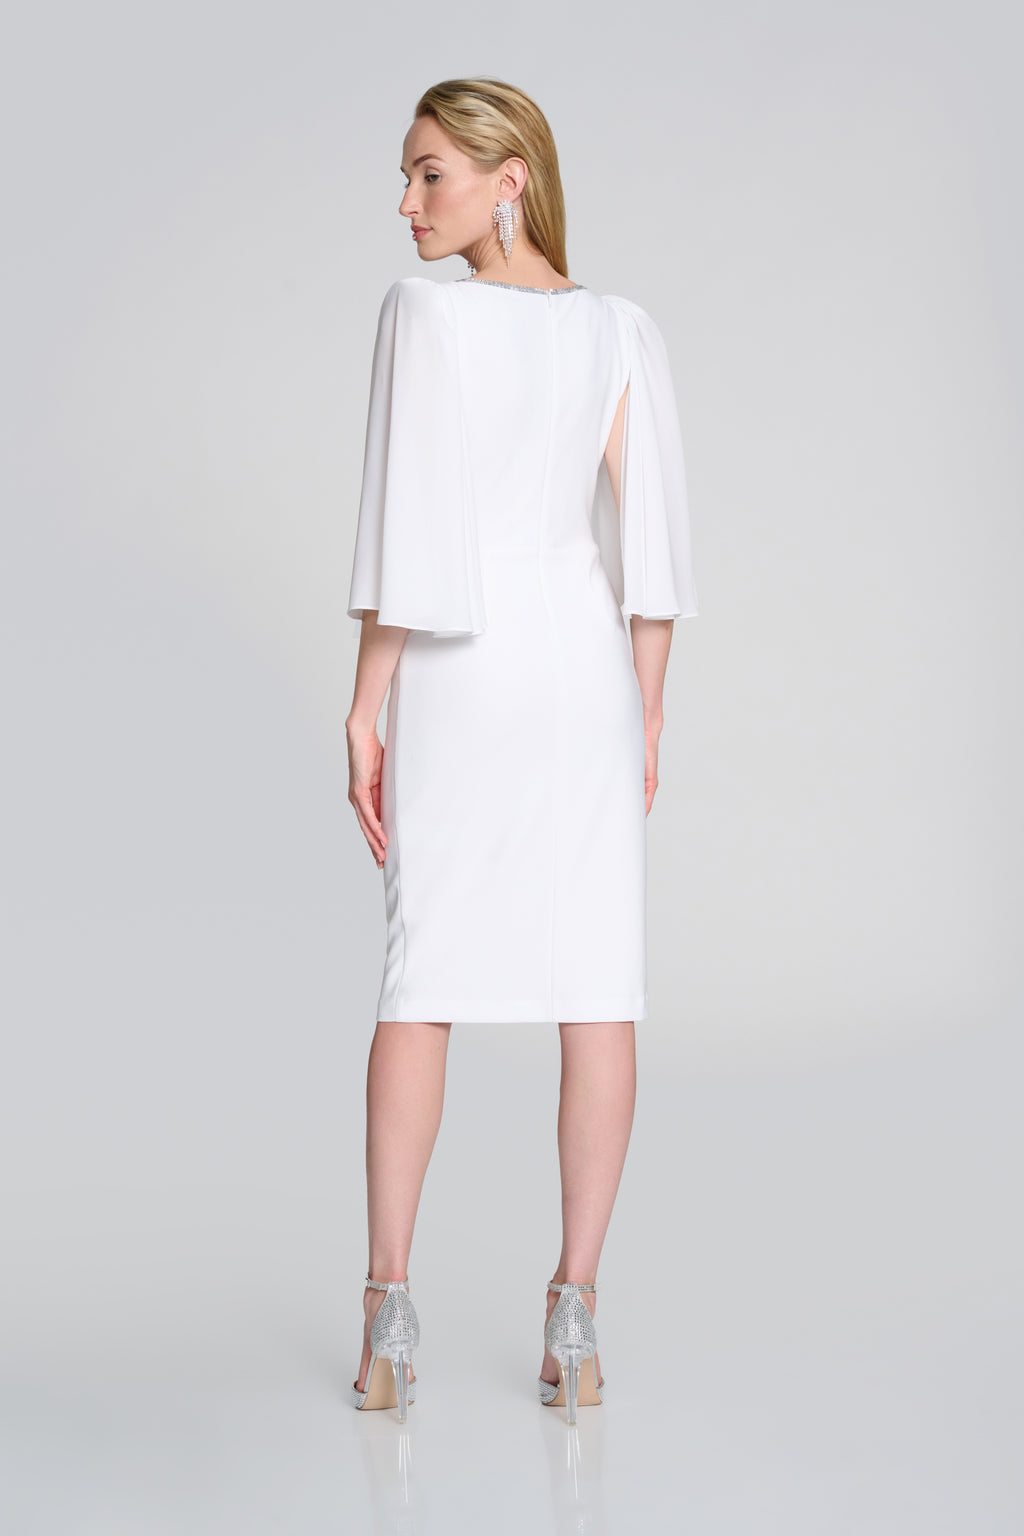 Joseph Ribkofff Vanilla Wrap Dress with Flowy Georgette Sleeves Style 242732